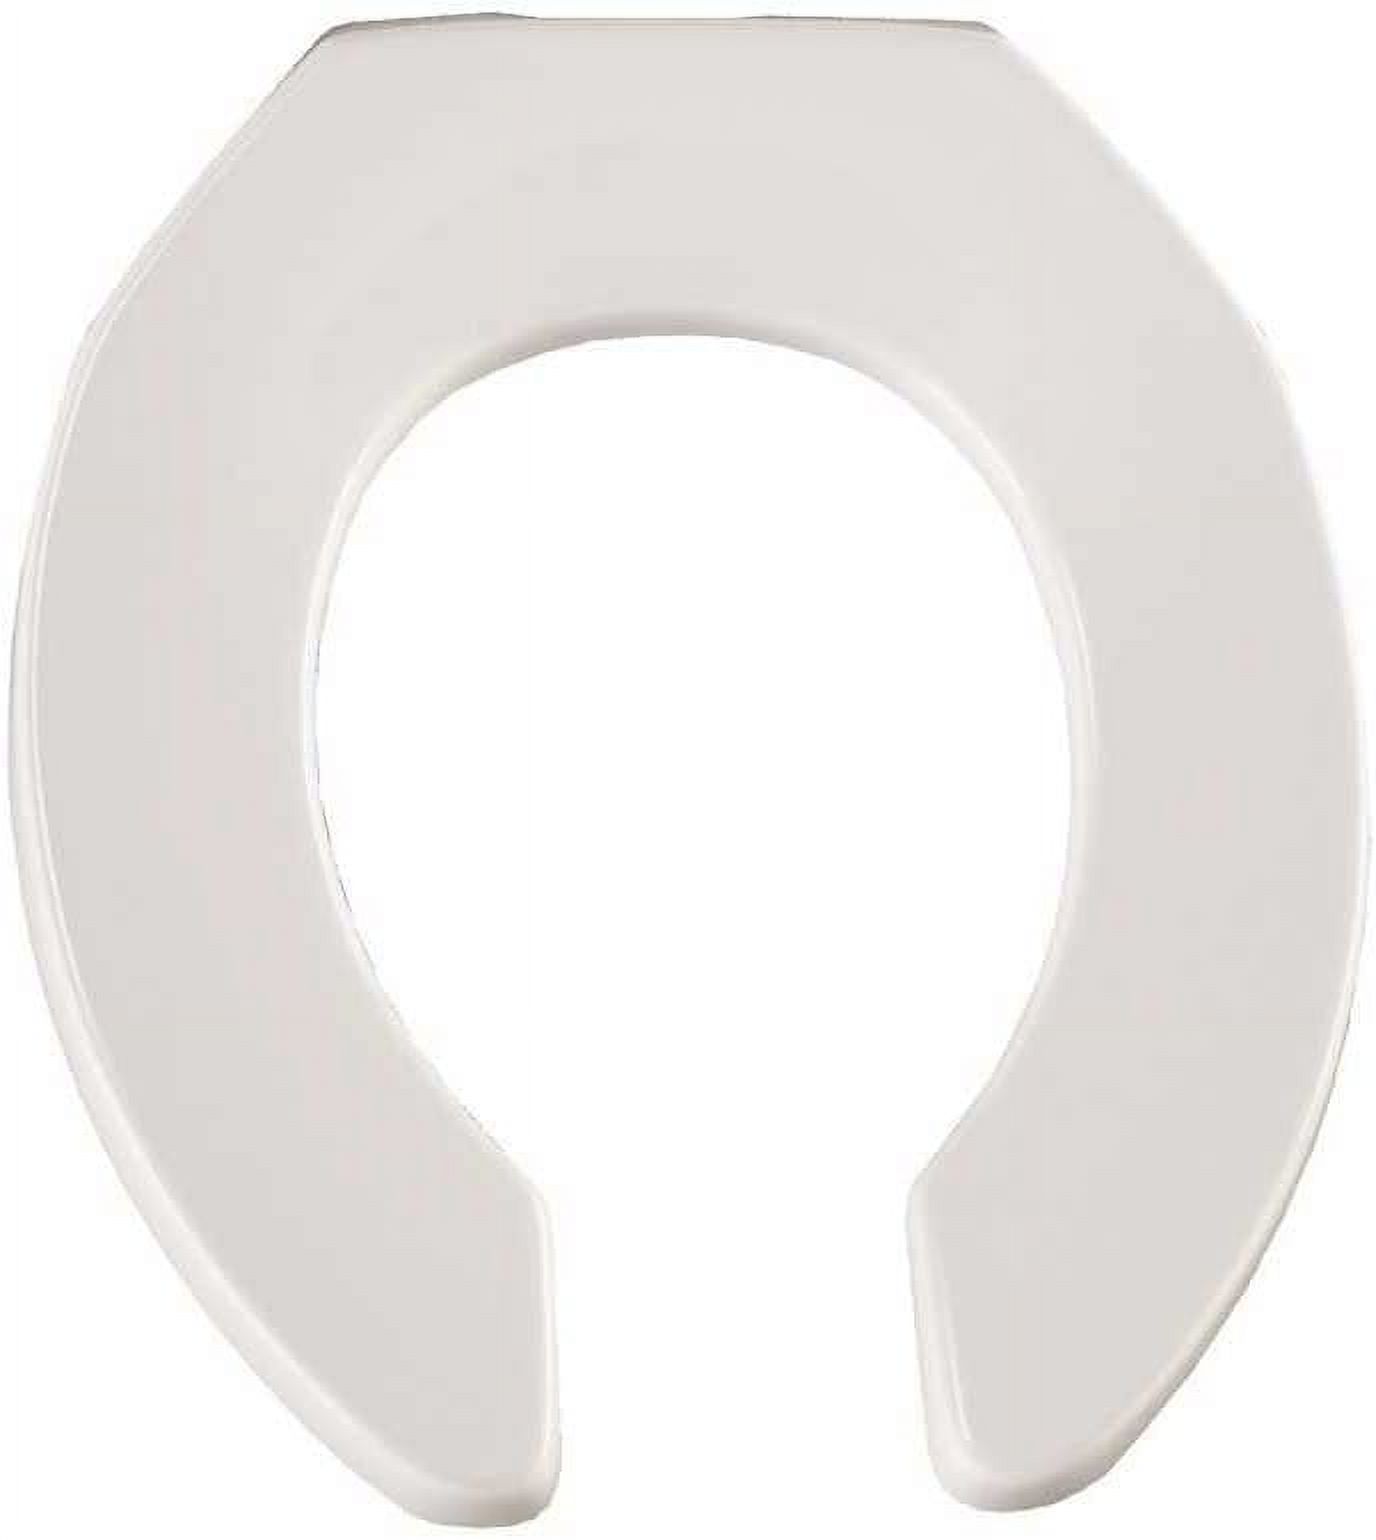 Bemis 1955CT 000 Mayfair Duraloy Open Elongated Toilet Seat, White - image 1 of 1